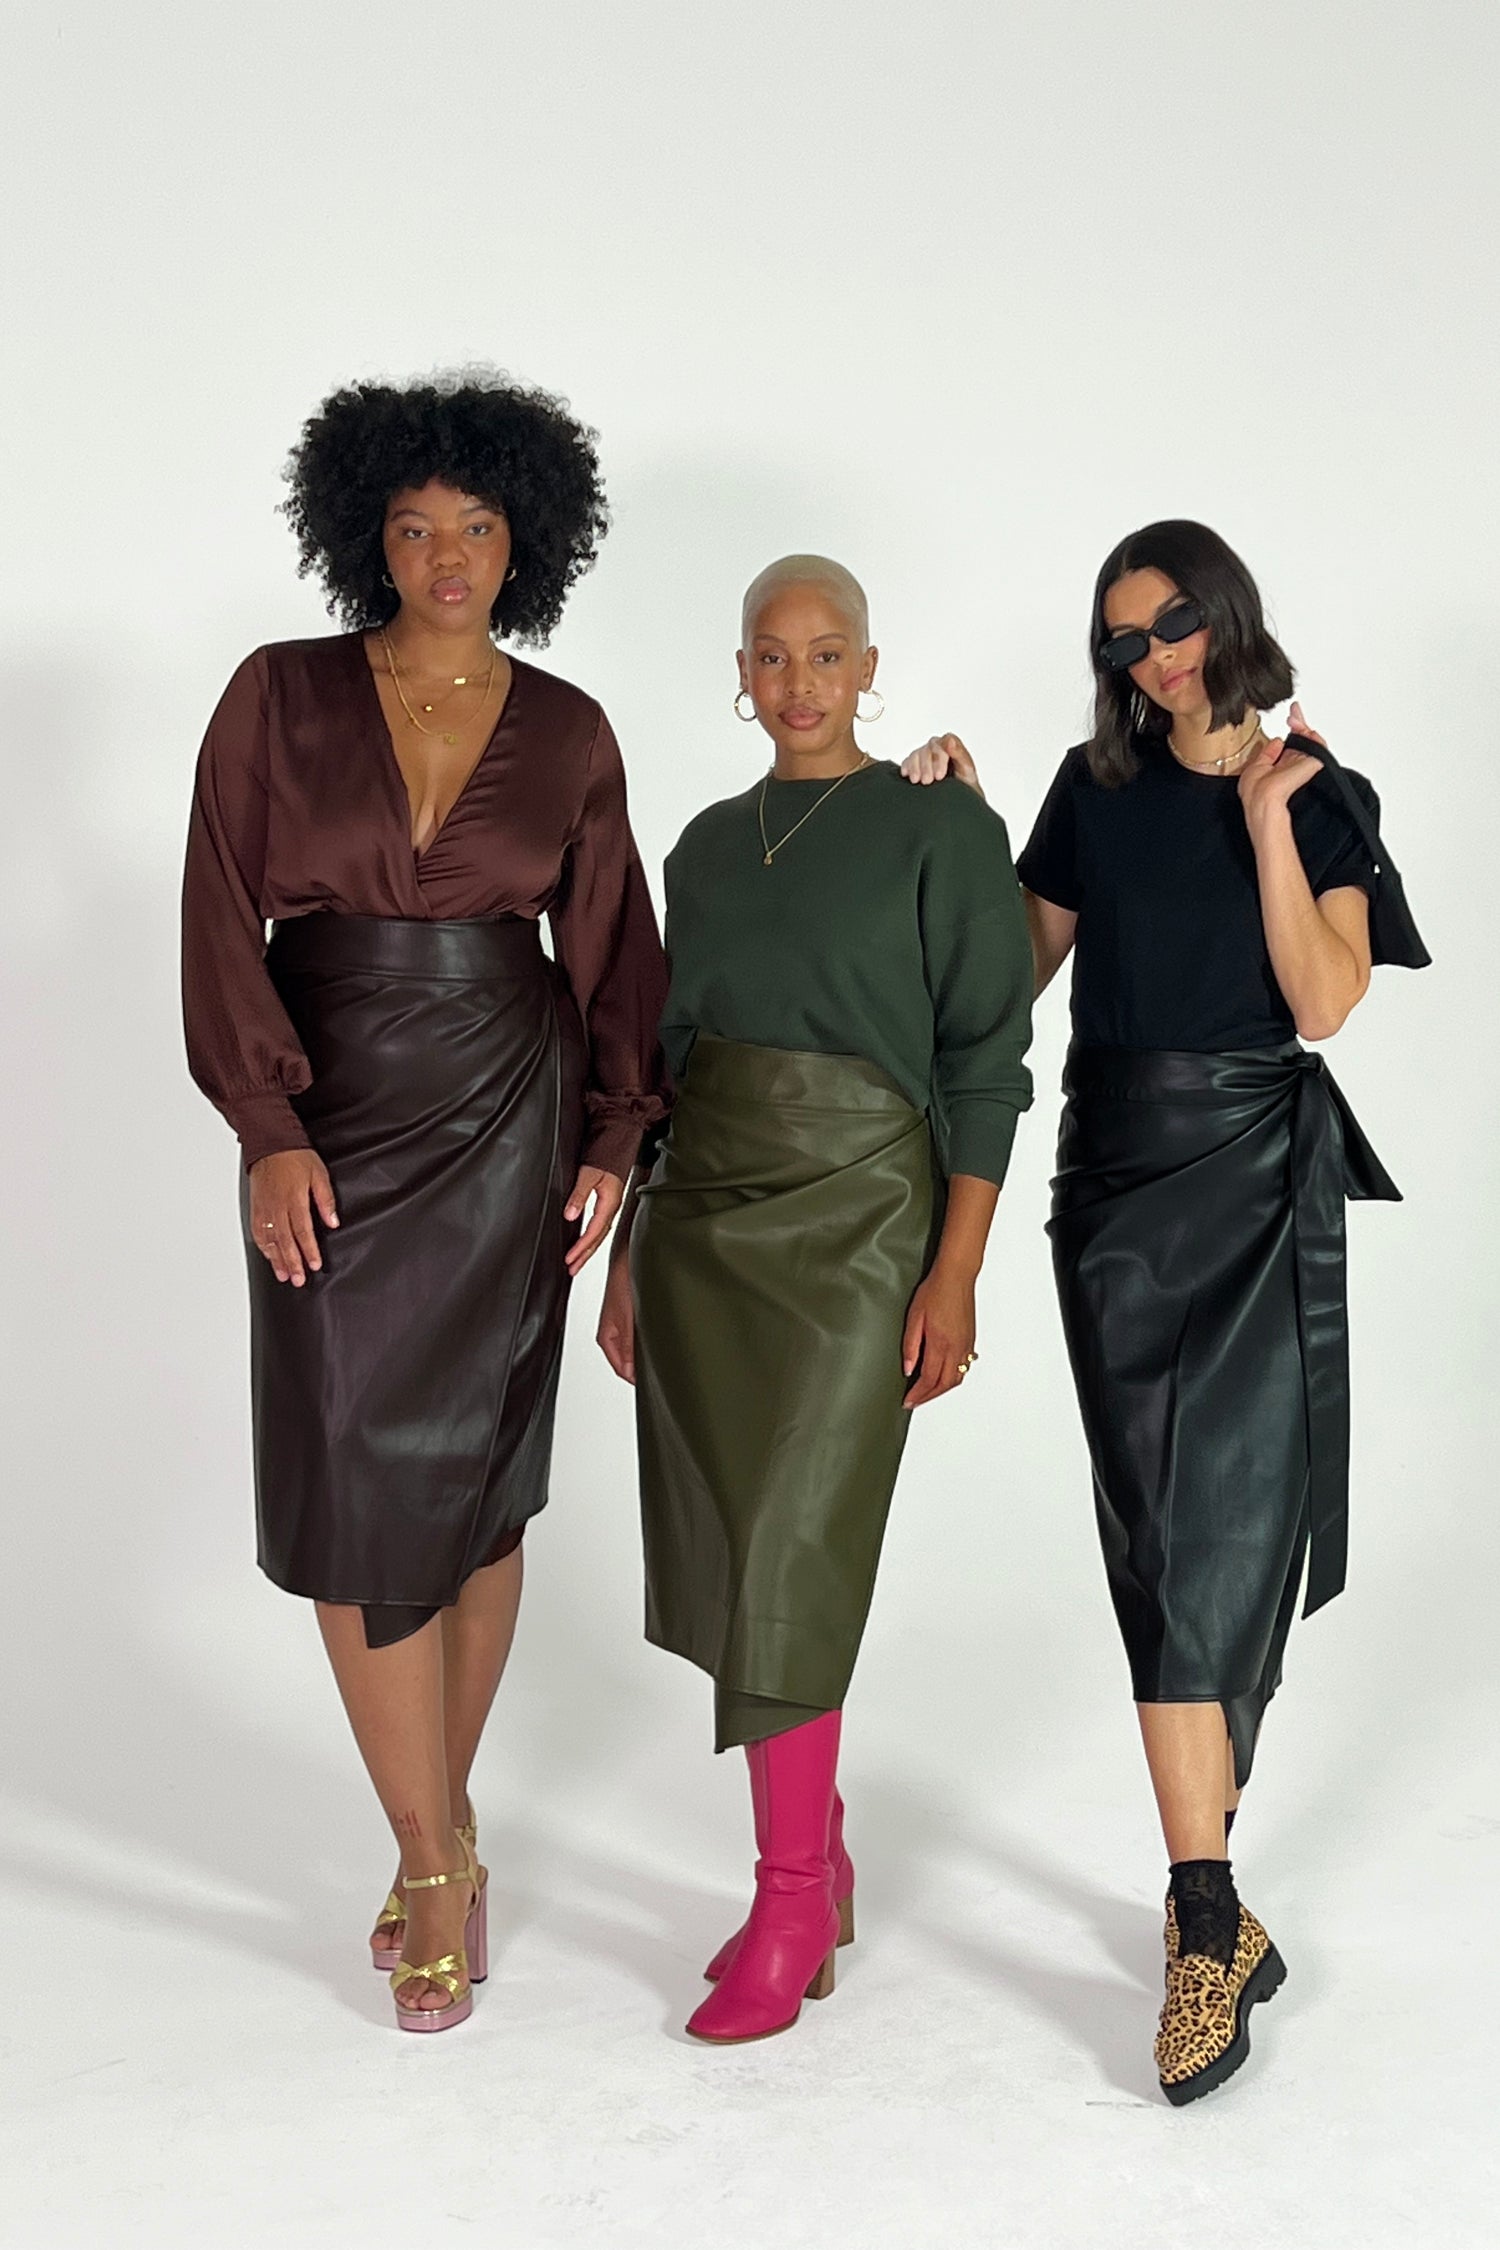 Models wearing Vegan Leather Jaspre Skrirts in brown, khaki and black